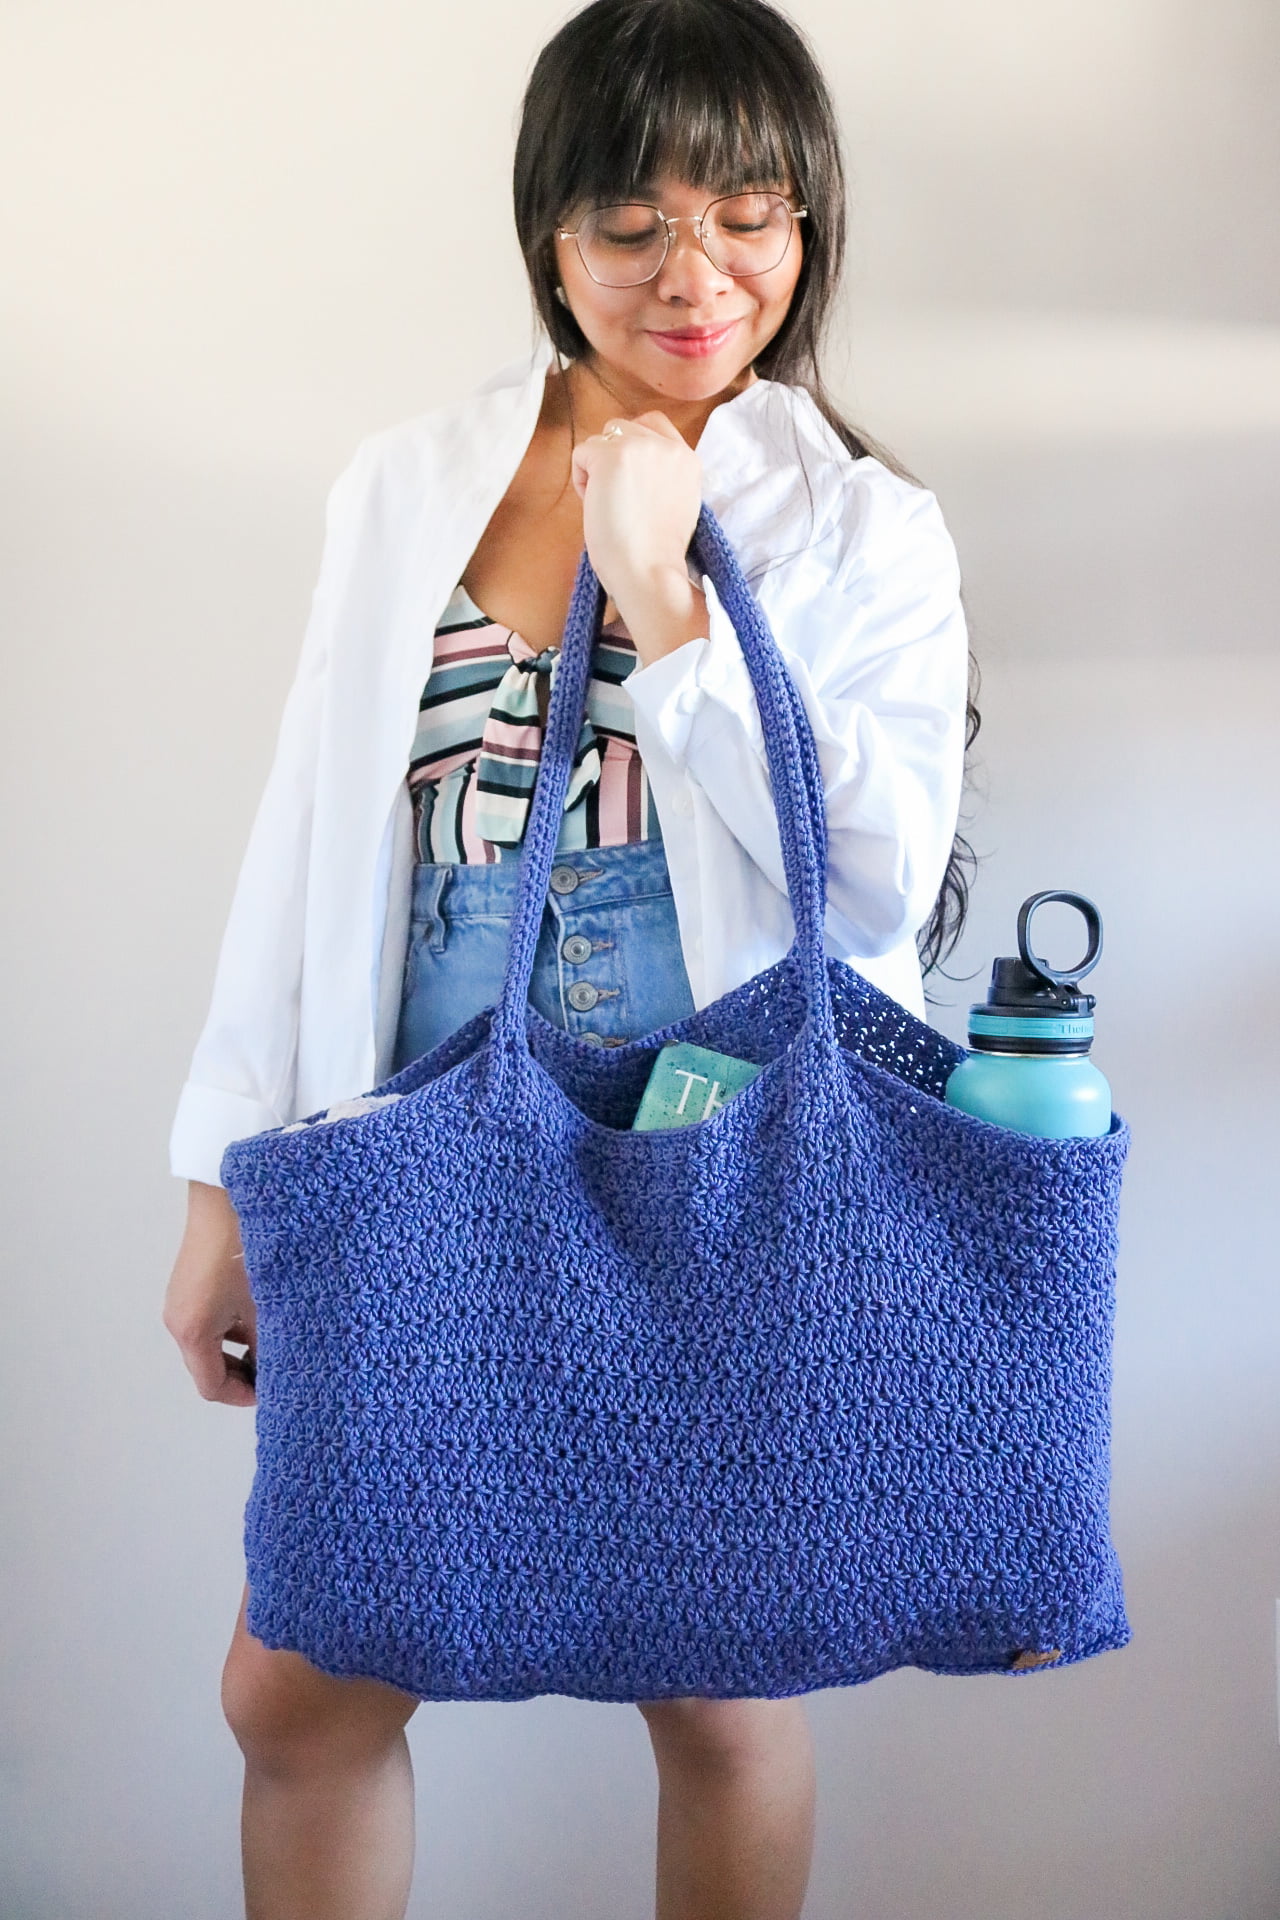 Beach bag pattern: knit a summer bag - Gathered